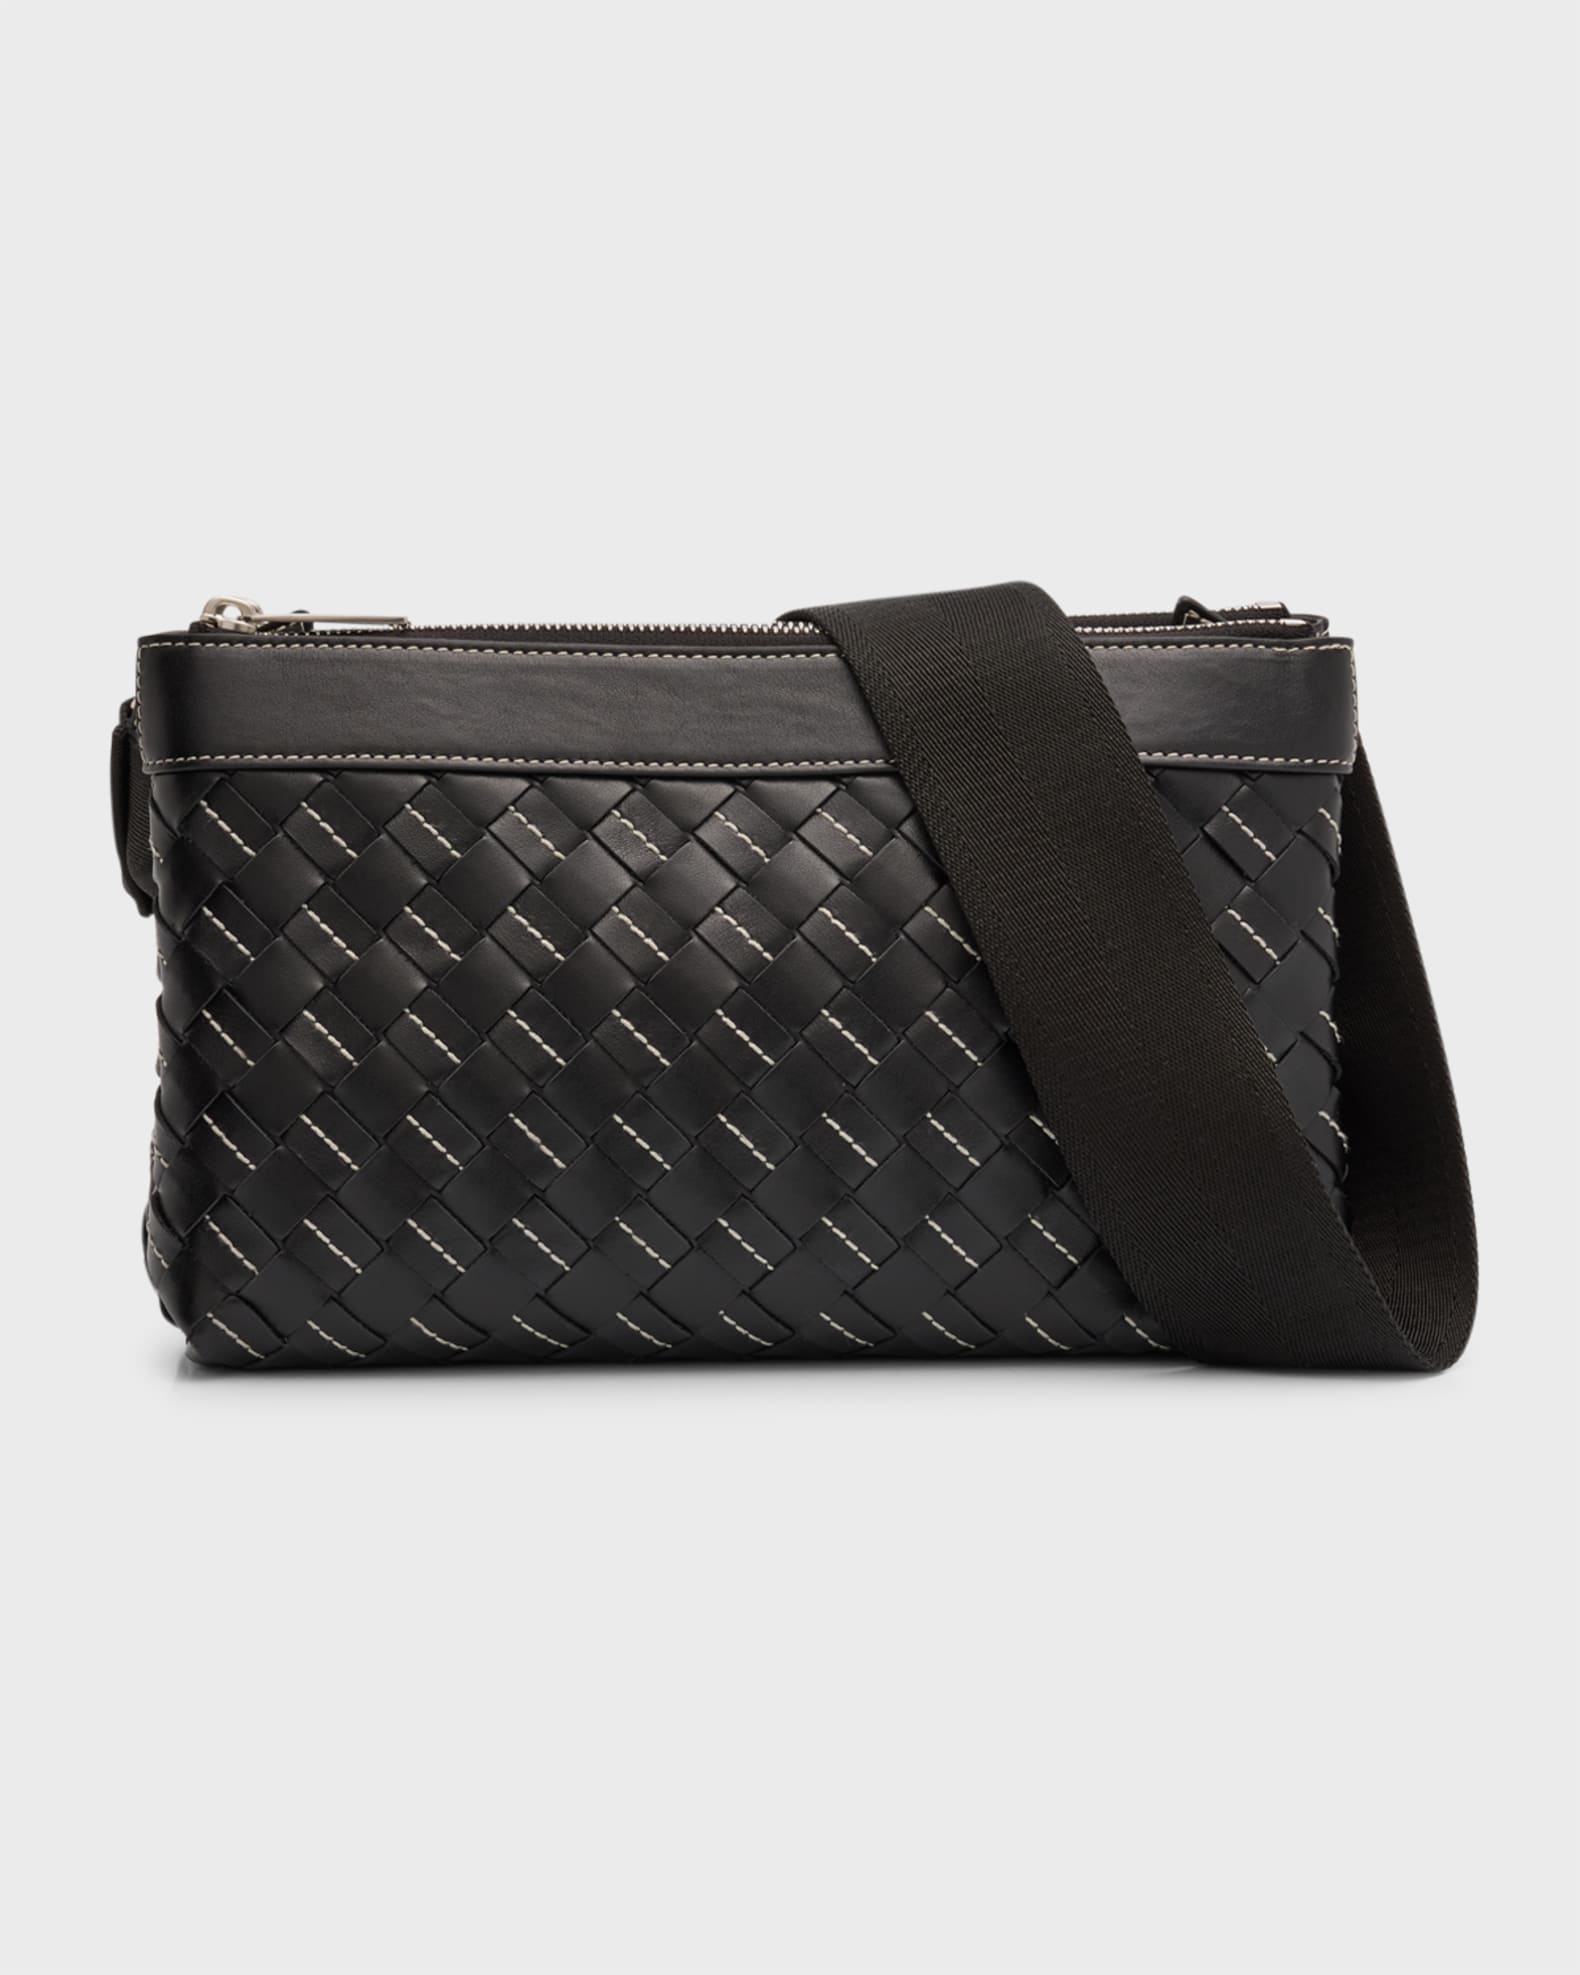 Bottega Veneta Men's Duo Intrecciato Leather Crossbody Bag | Neiman Marcus